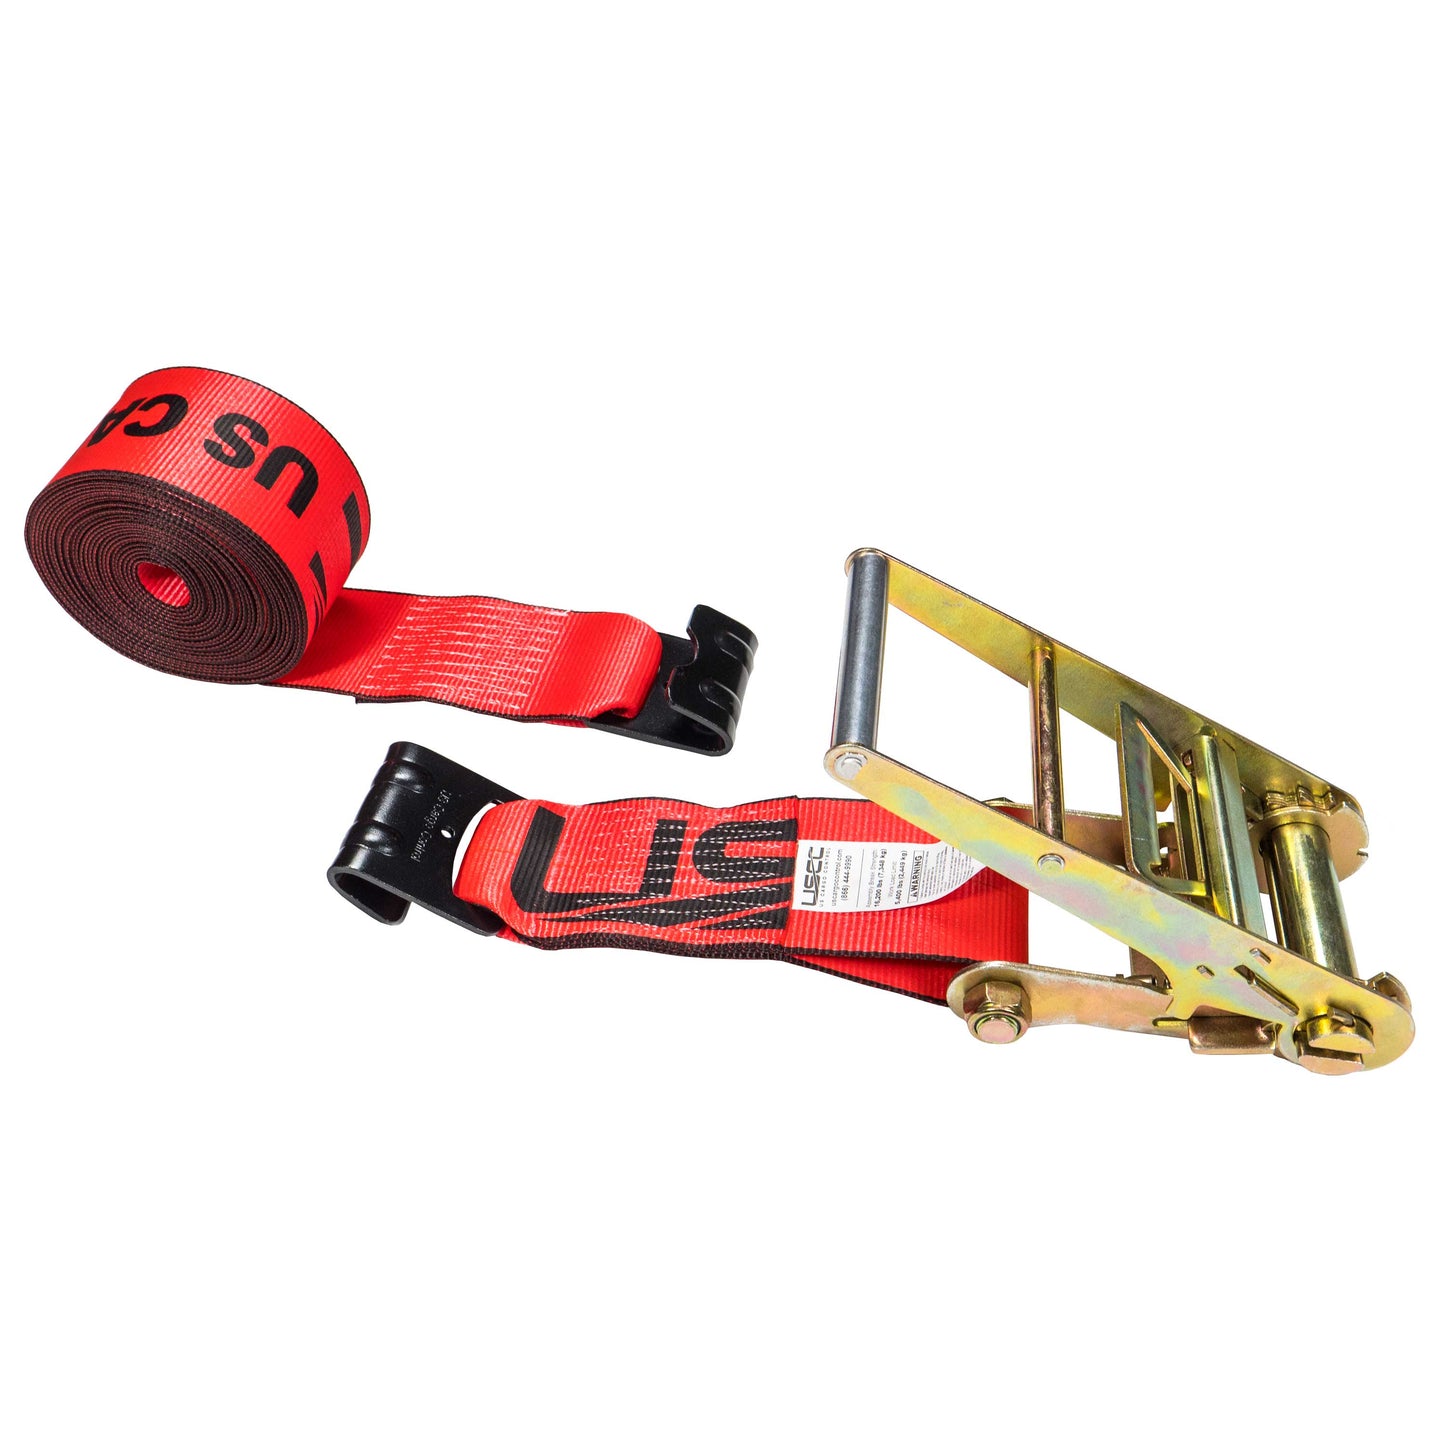 27' 4" heavy-duty red flat hook ratchet strap